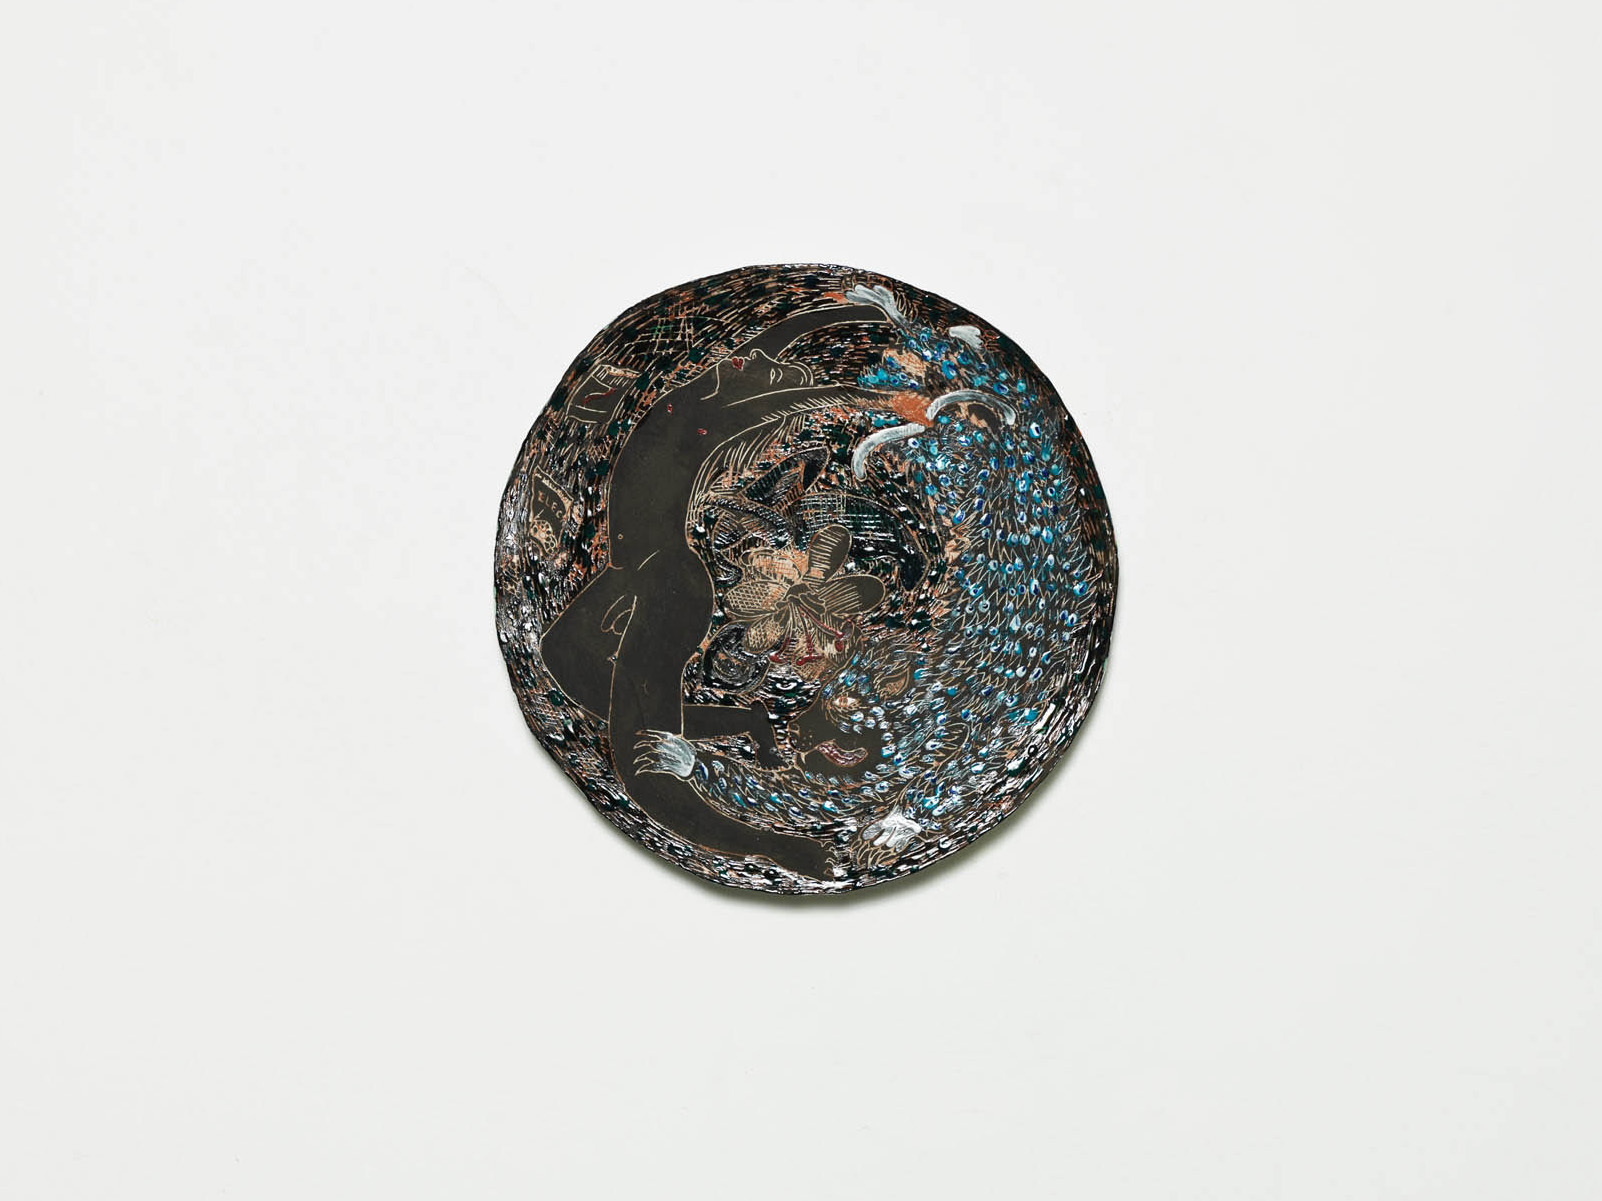 Paul DD Smith, In the Garden, 2020, Glazed ceramic, Diameter 34 cm x 3 cm